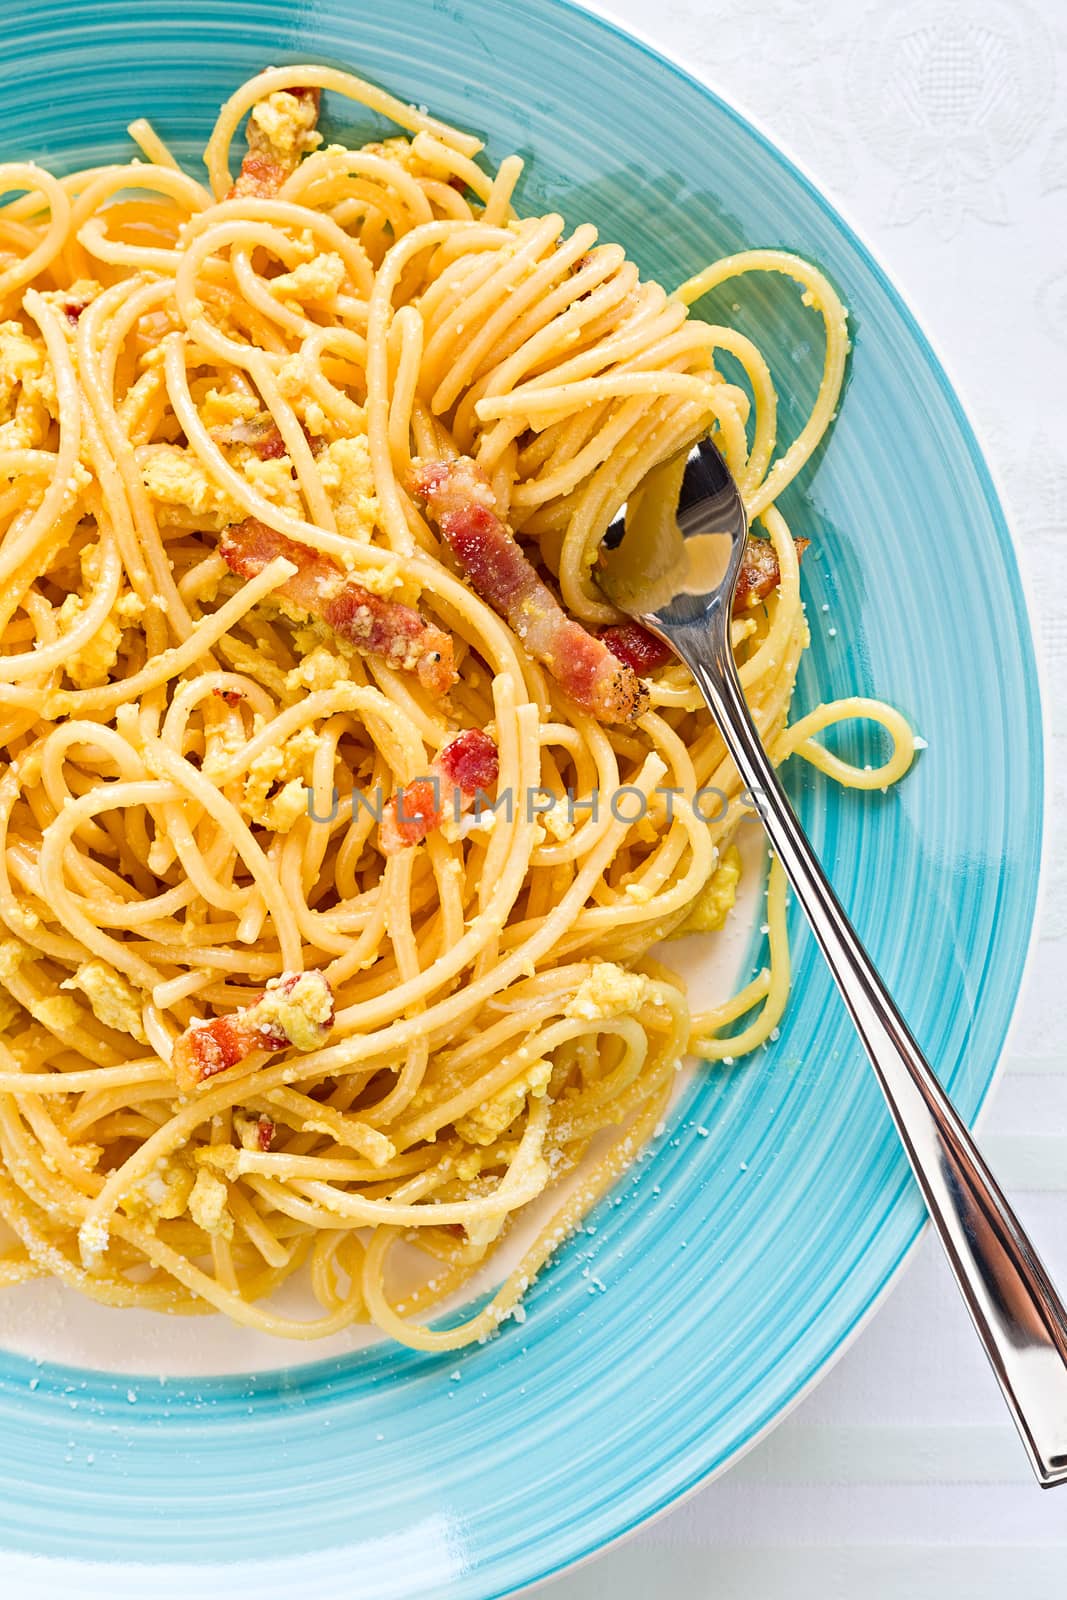 Italian spaghetti carbonara by LuigiMorbidelli